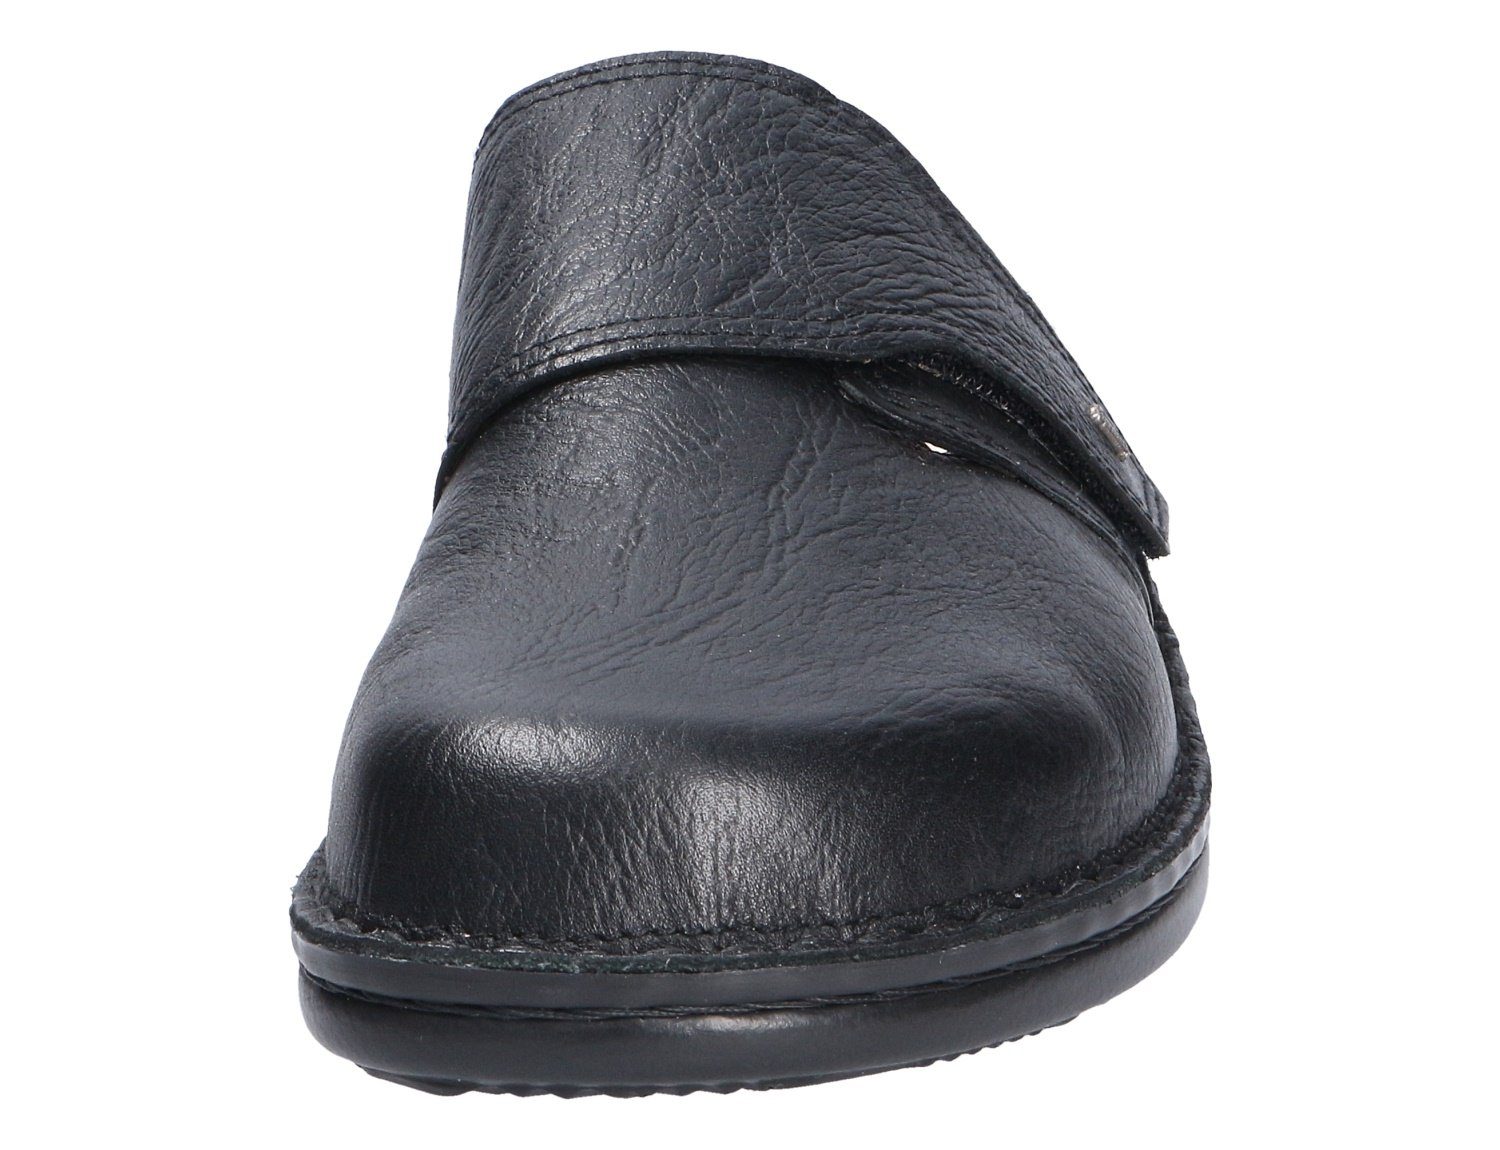 Finn Pantolette Qualität Comfort black Hochwertige